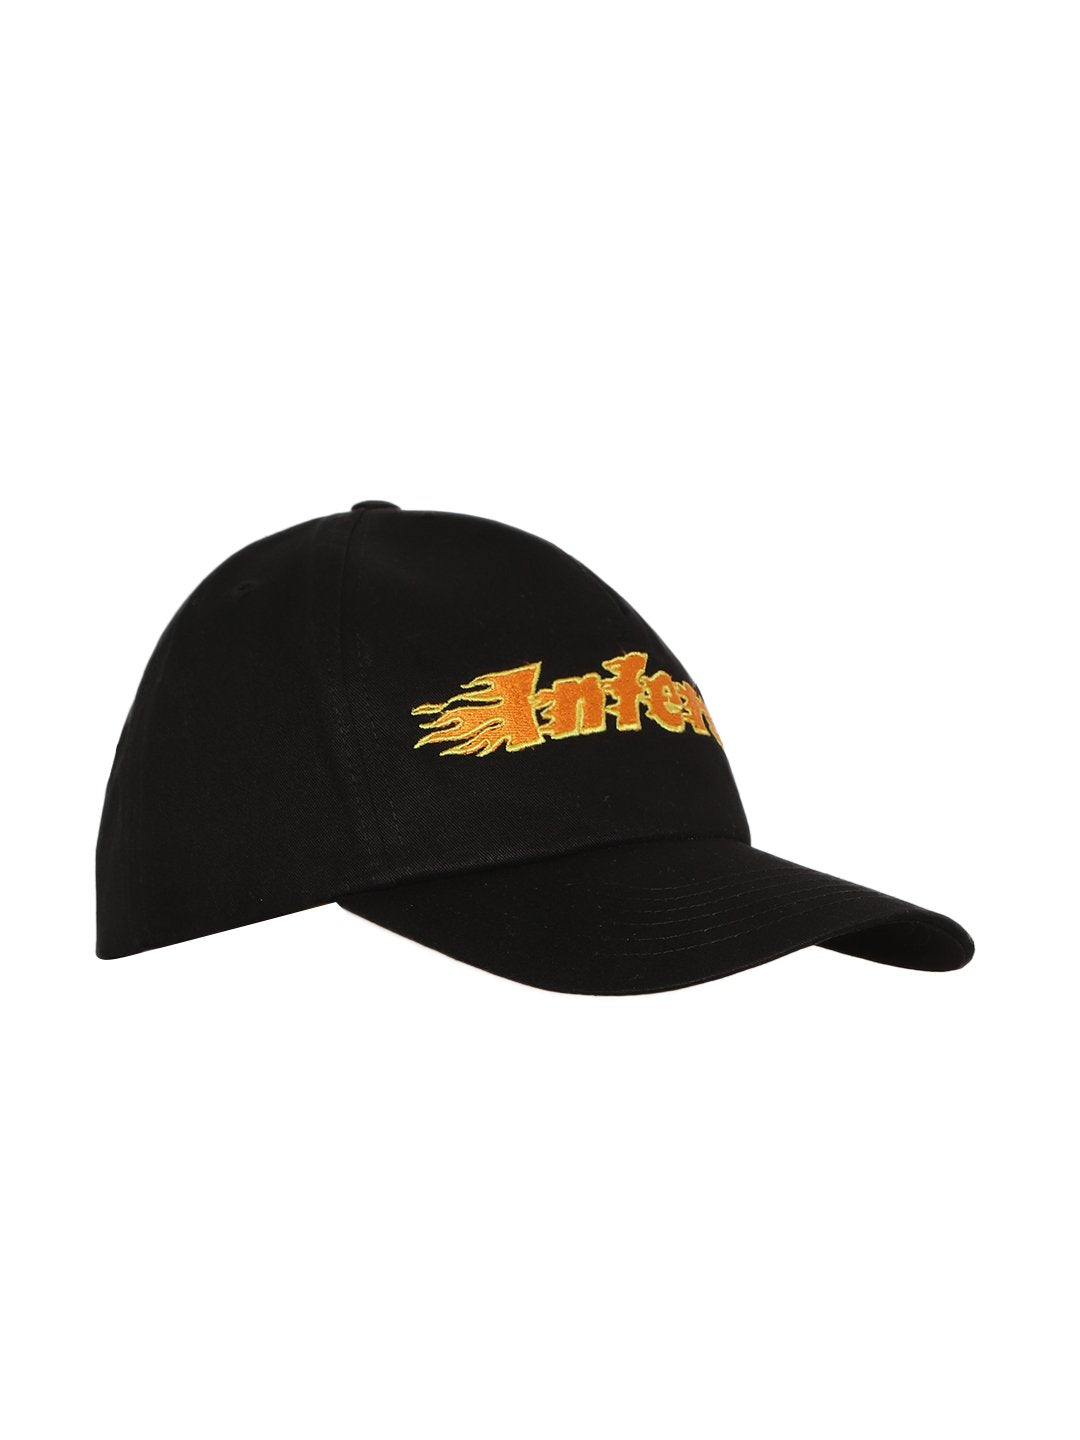 Lazy panda Unisex black cap inferno embroidery baseball cap